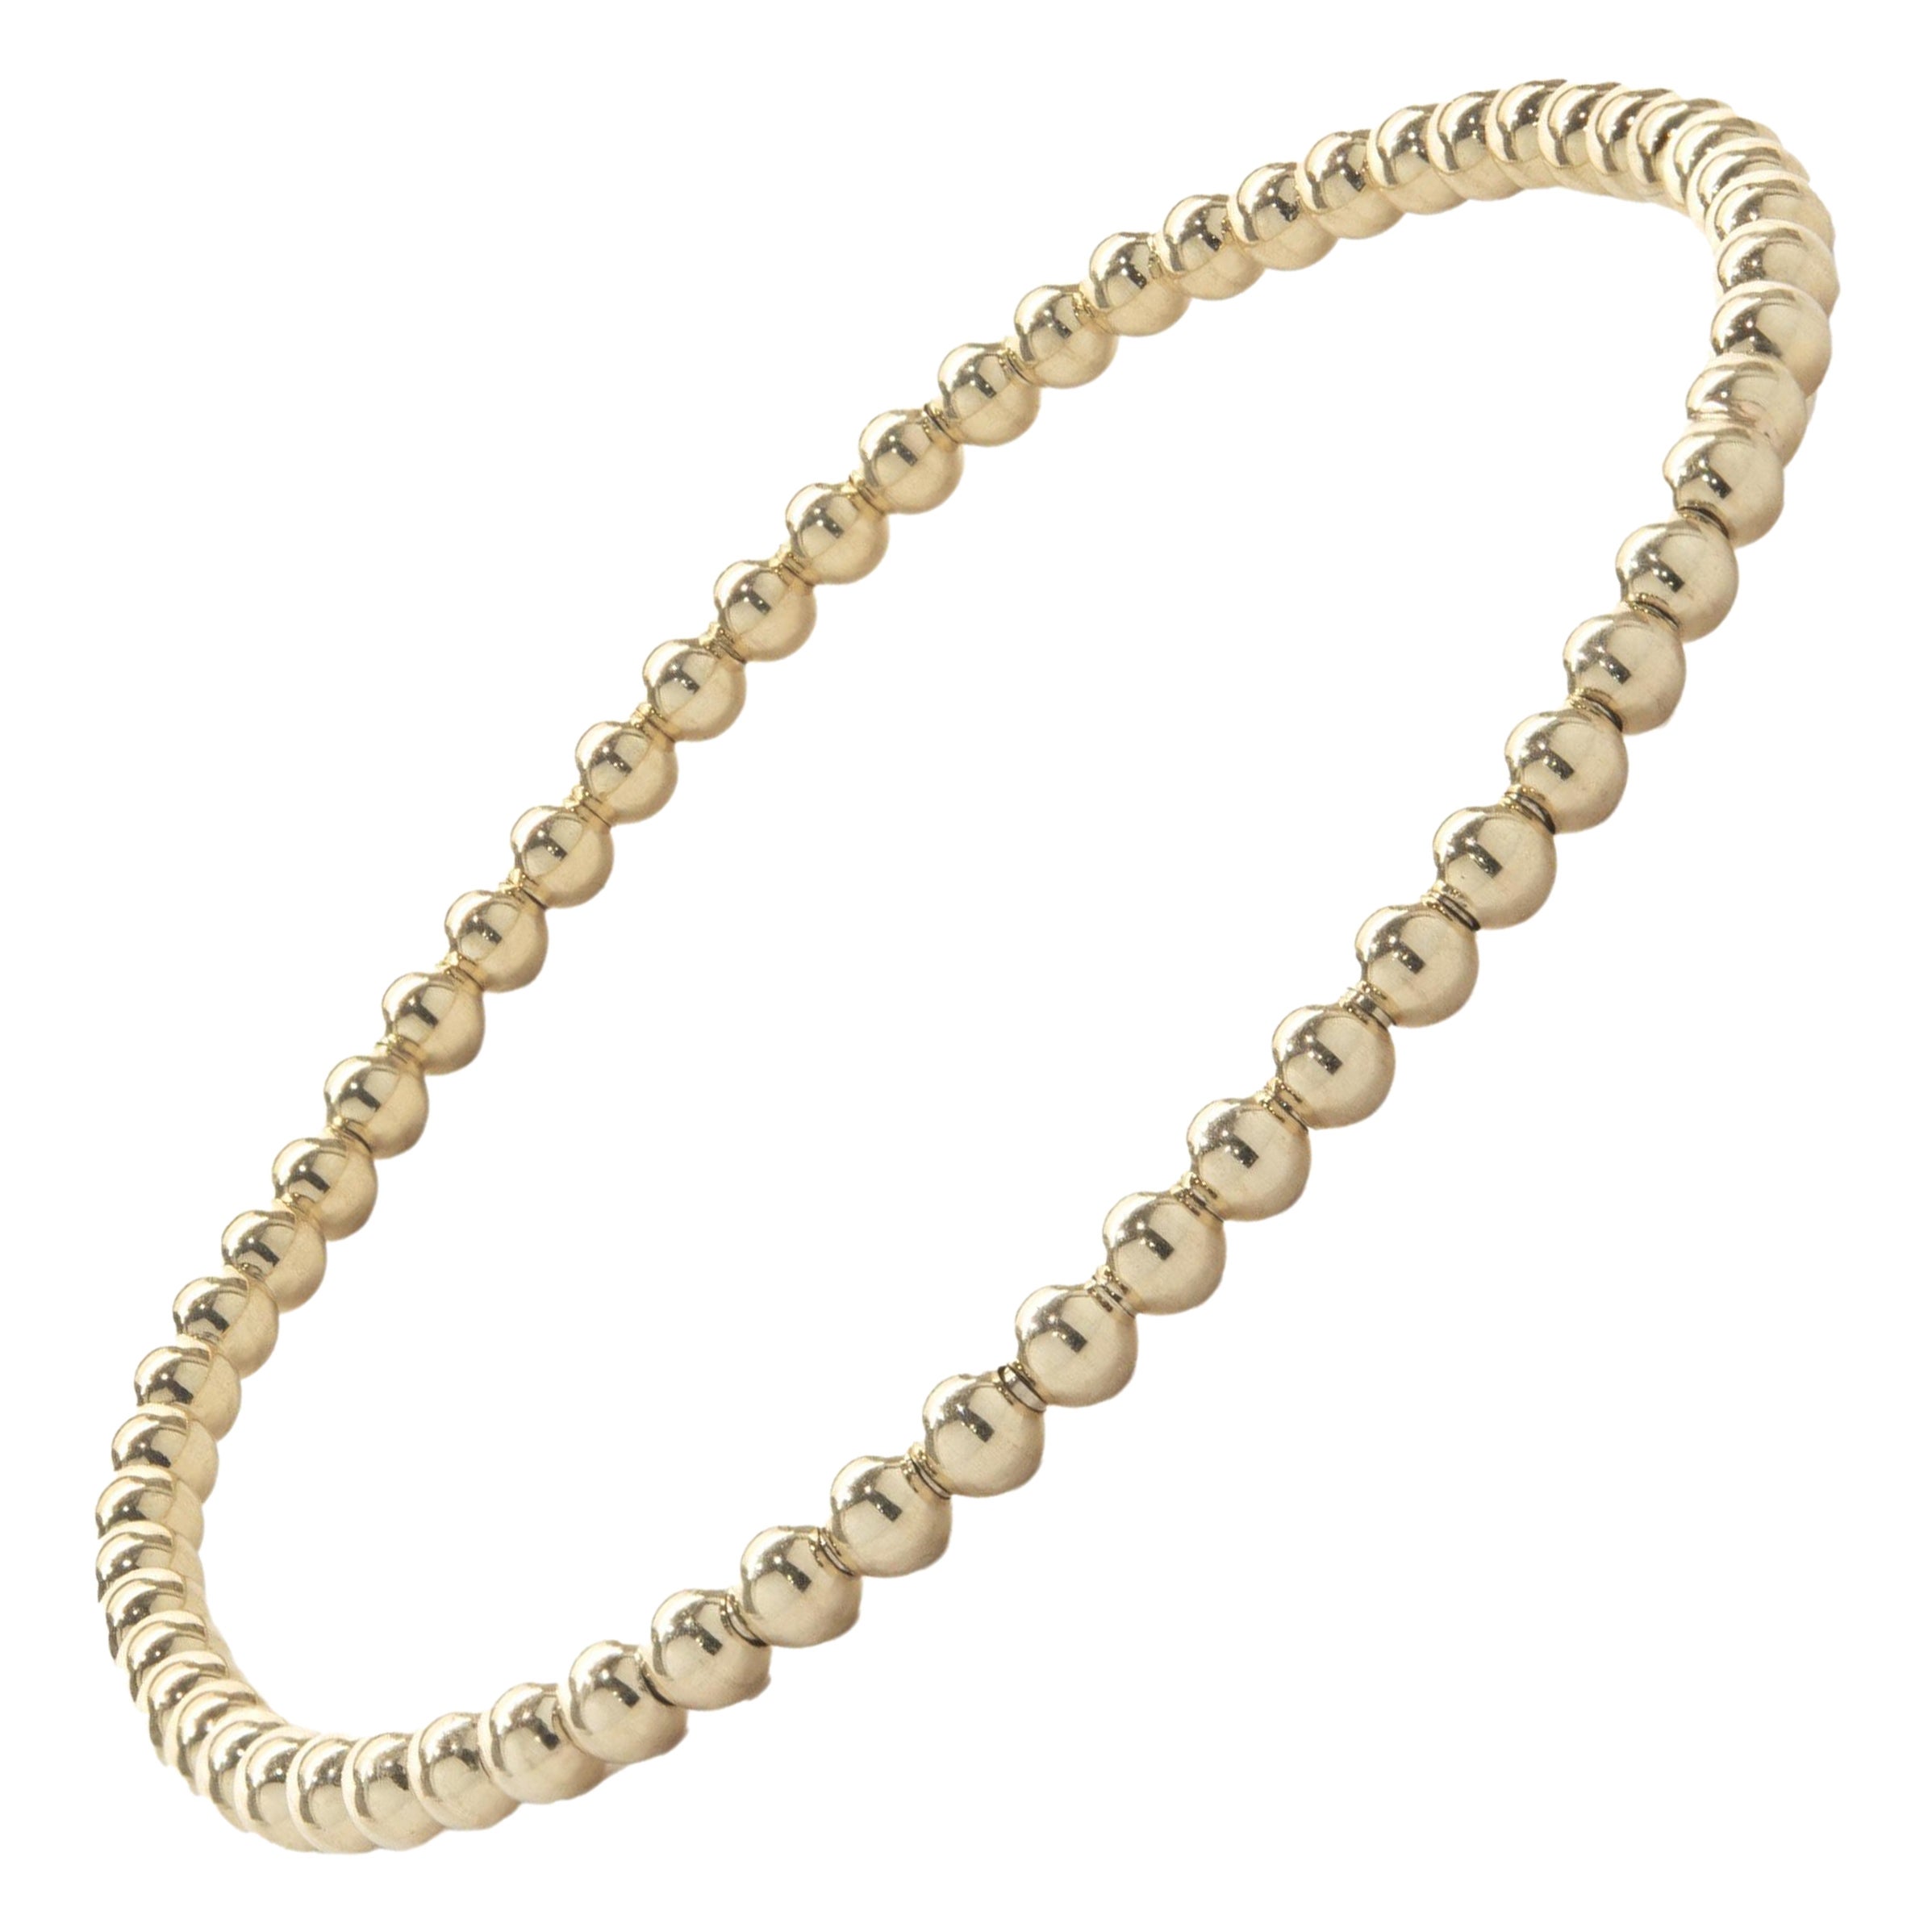 Bracelet flexible en or jaune 14 carats